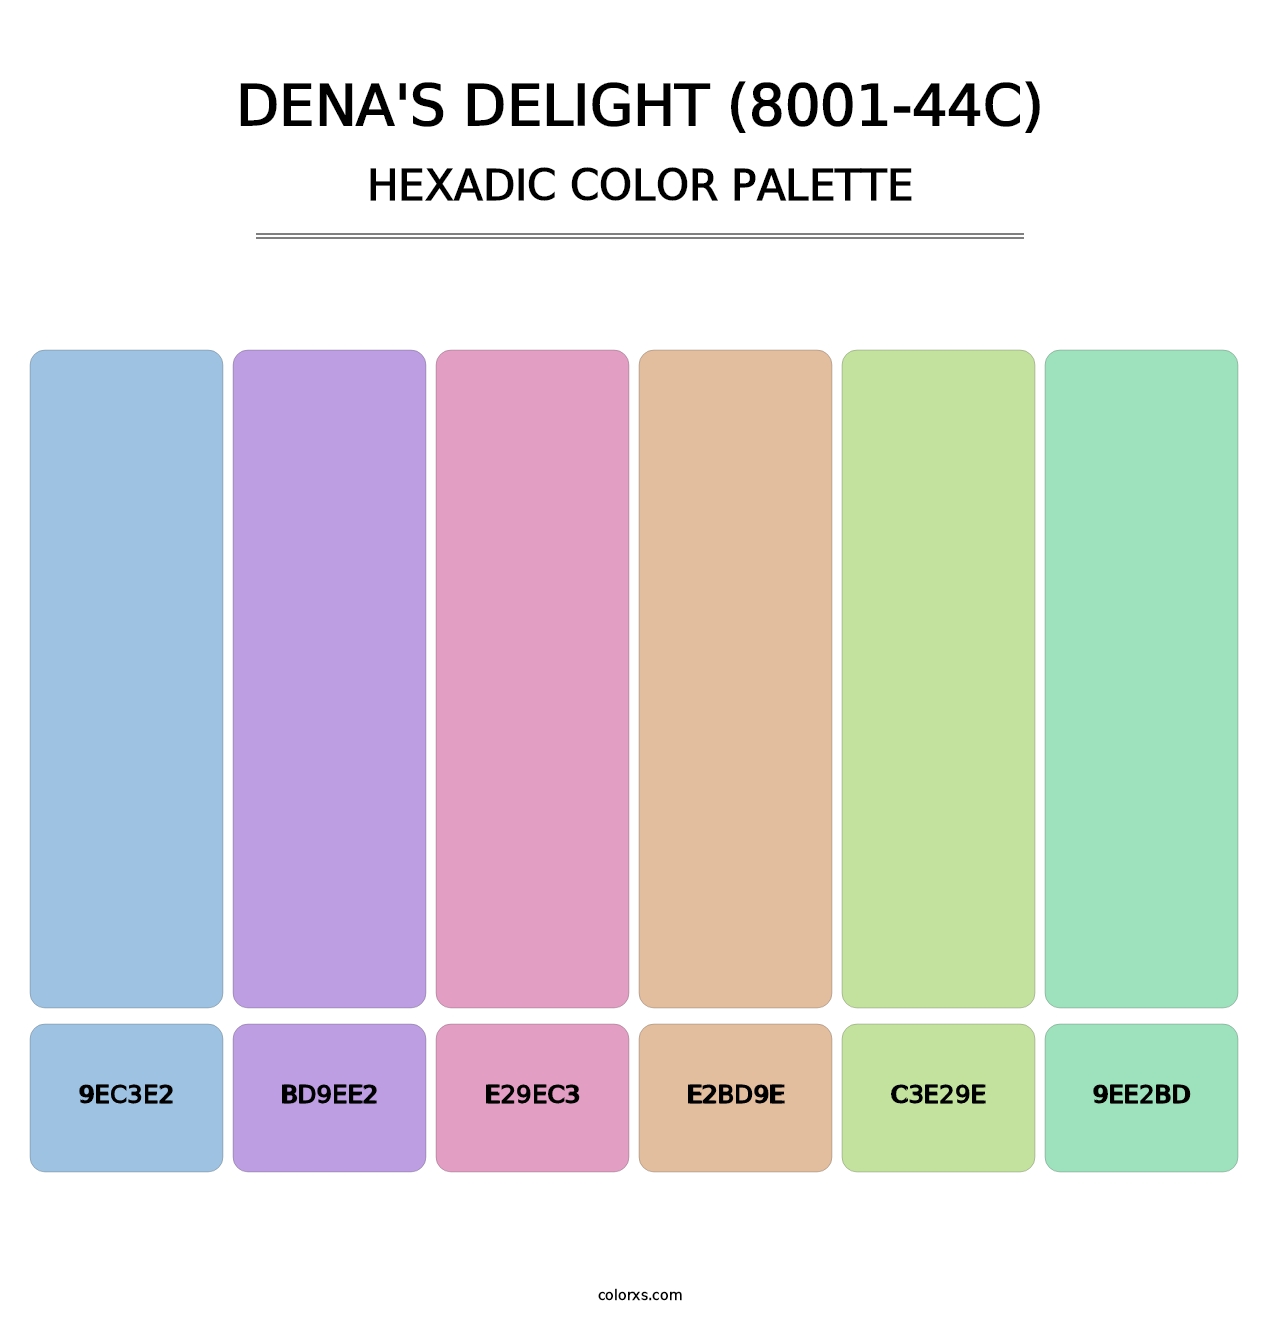 Dena's Delight (8001-44C) - Hexadic Color Palette